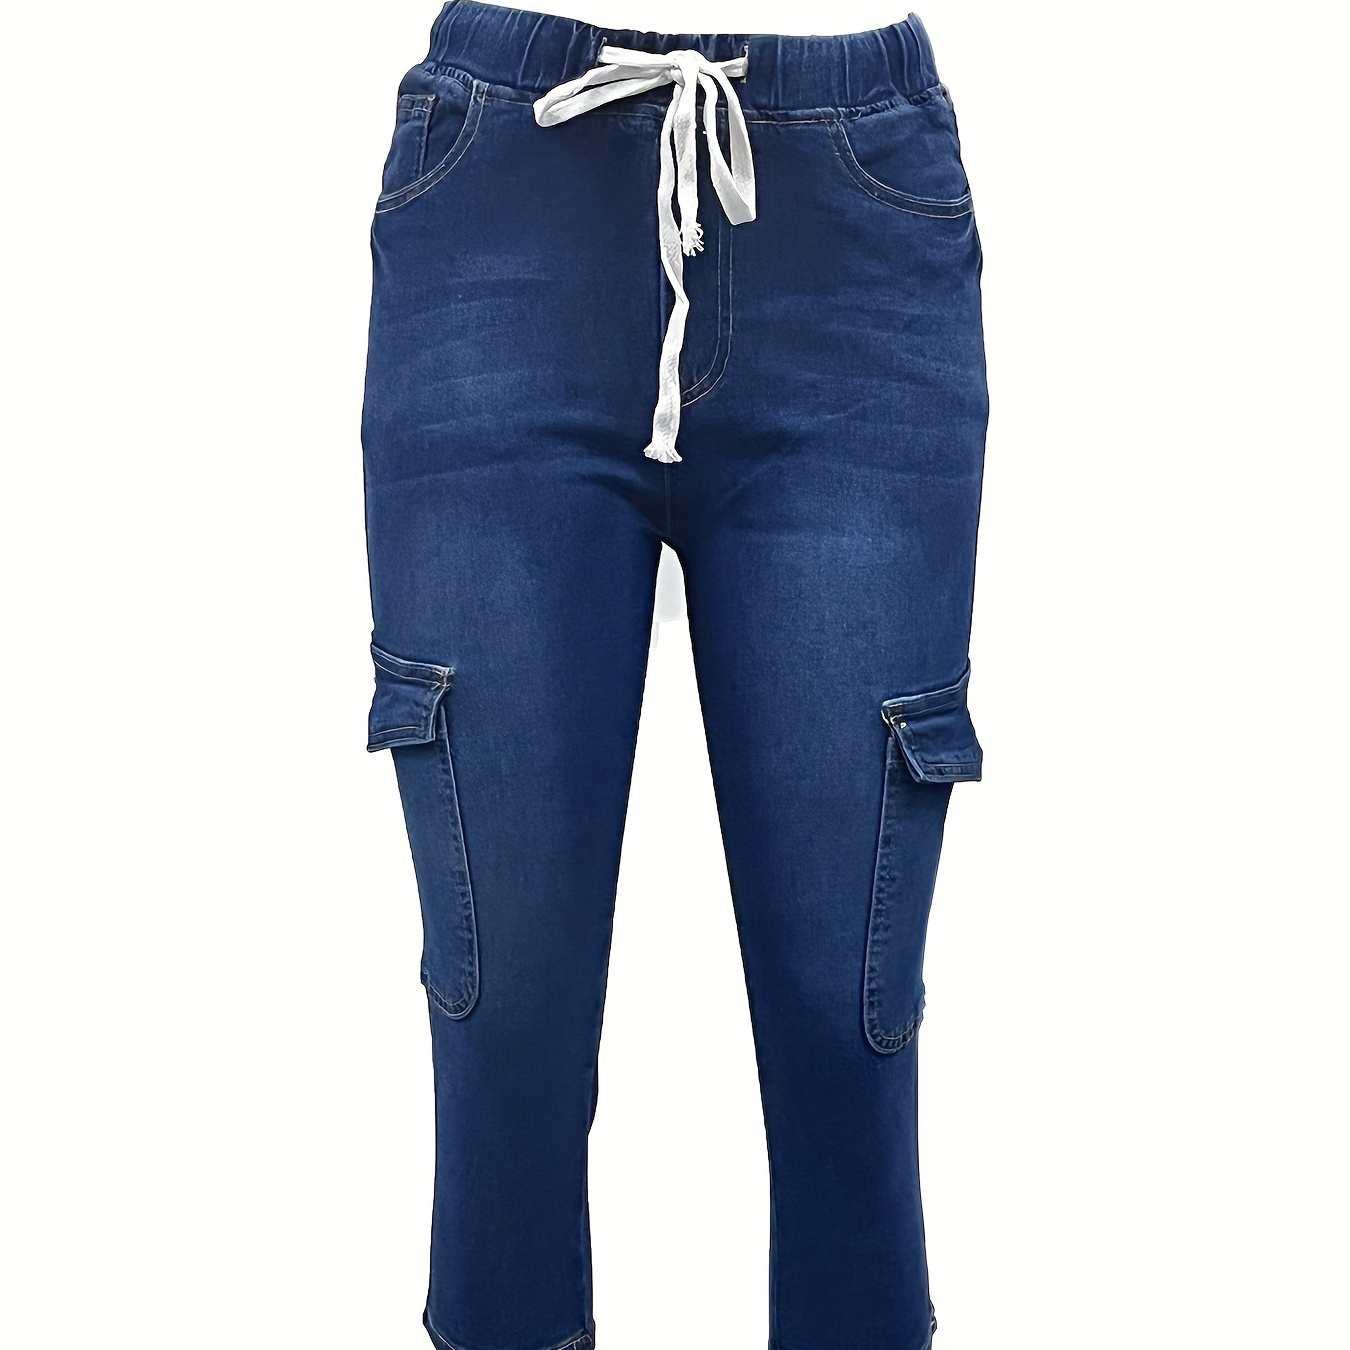 Slim jeans stretch skinny capri pants elastic drawstring denim